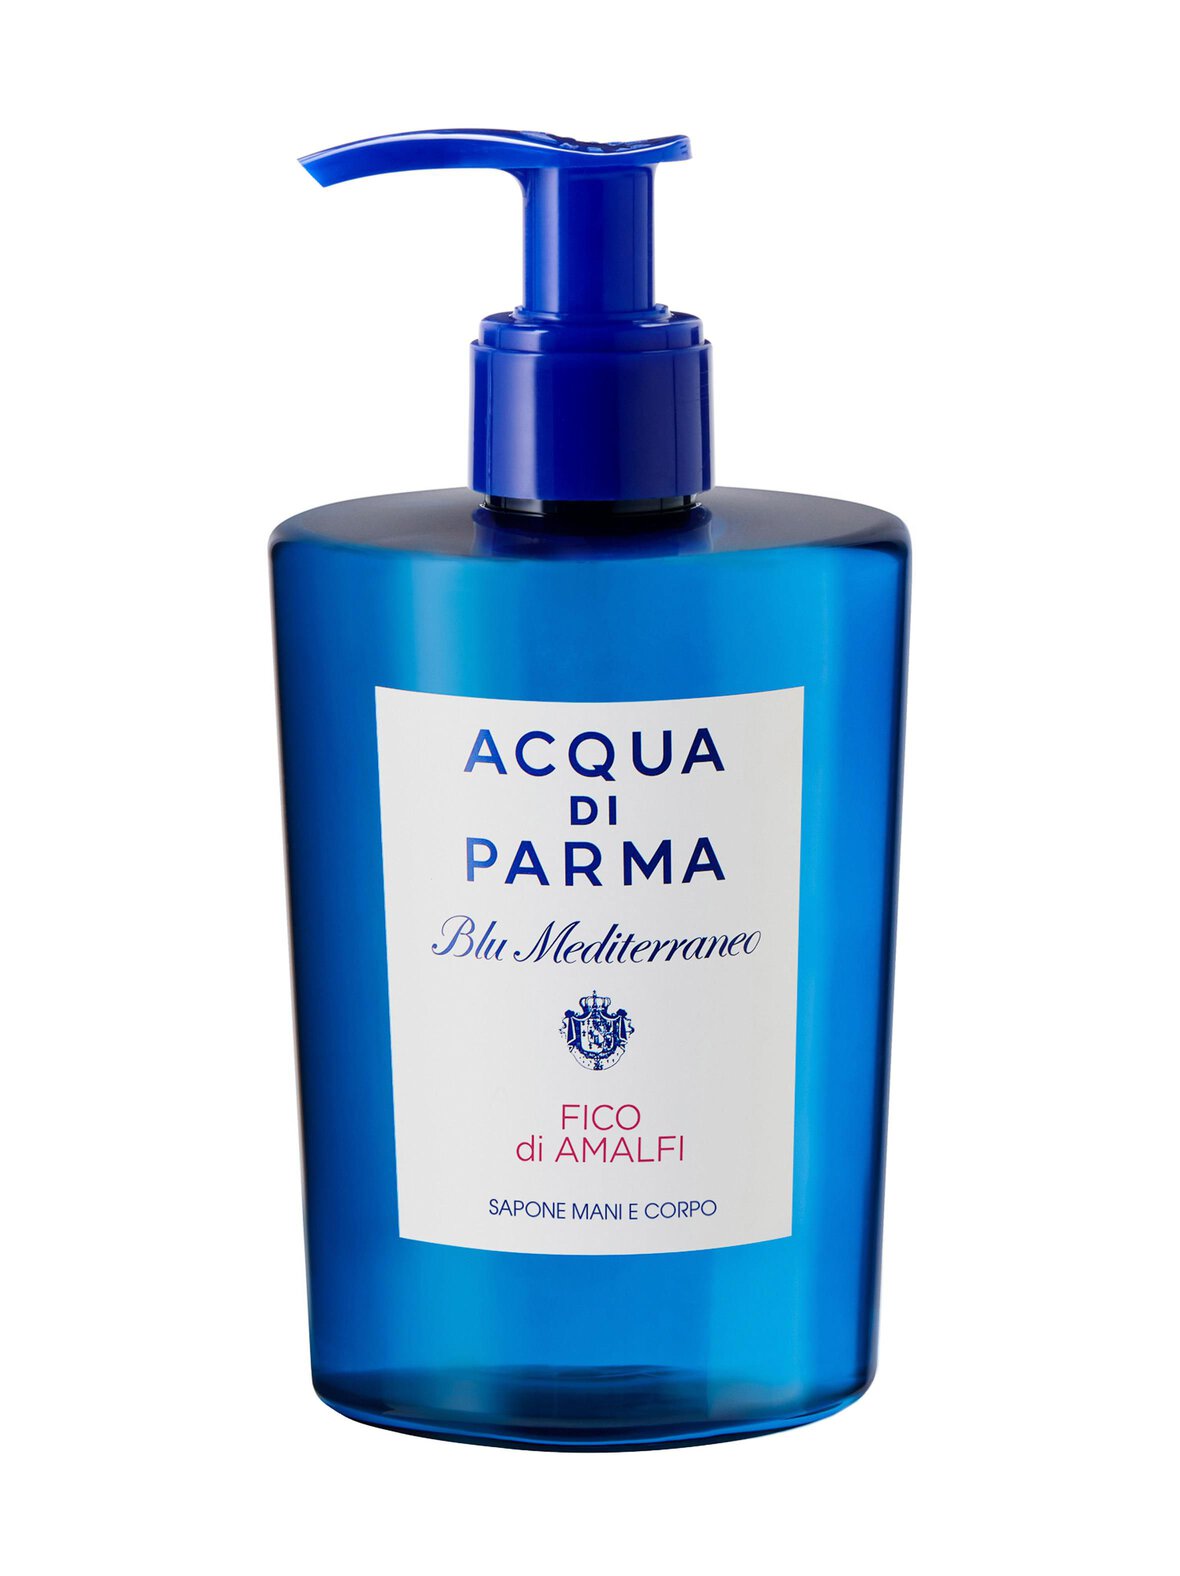 Acqua Di Parma Blu mediterraneo fico di amalfi hand body wash -käsien ja vartalon puhdistusgeeli